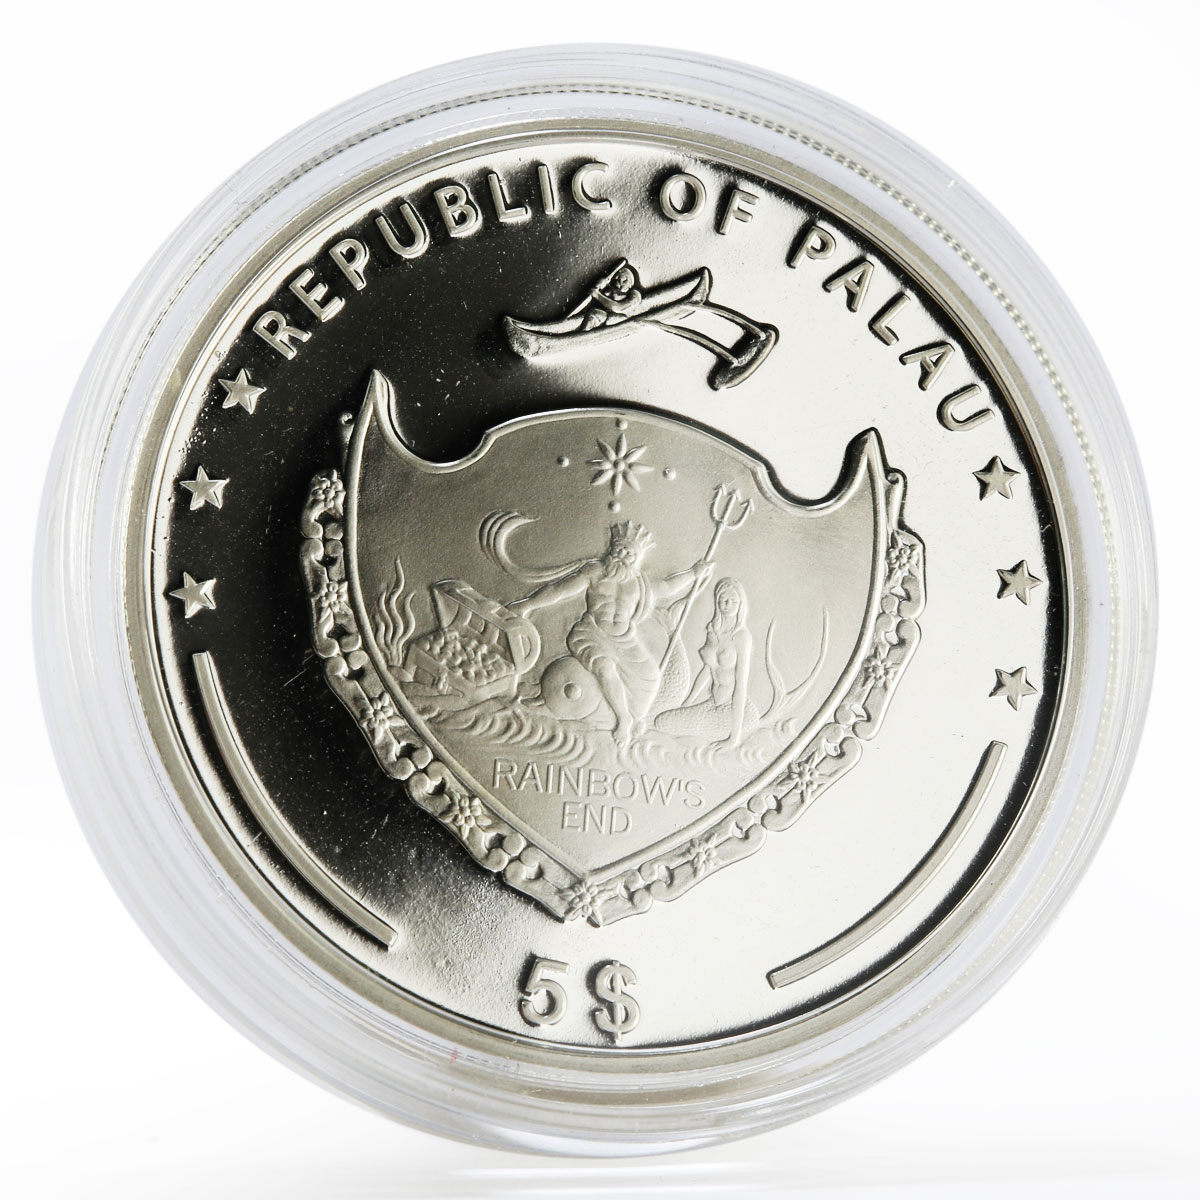 Palau 5 dollars Treasures of the Sea Marine Life silver proof coin 2010